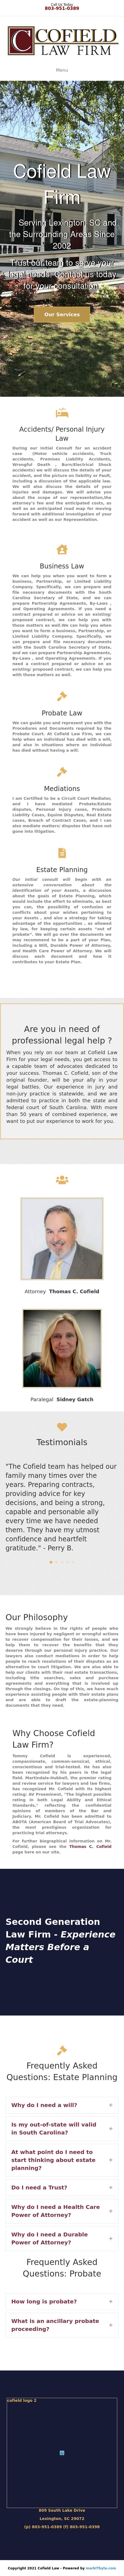 Cofield Law Firm - Lexington SC Lawyers